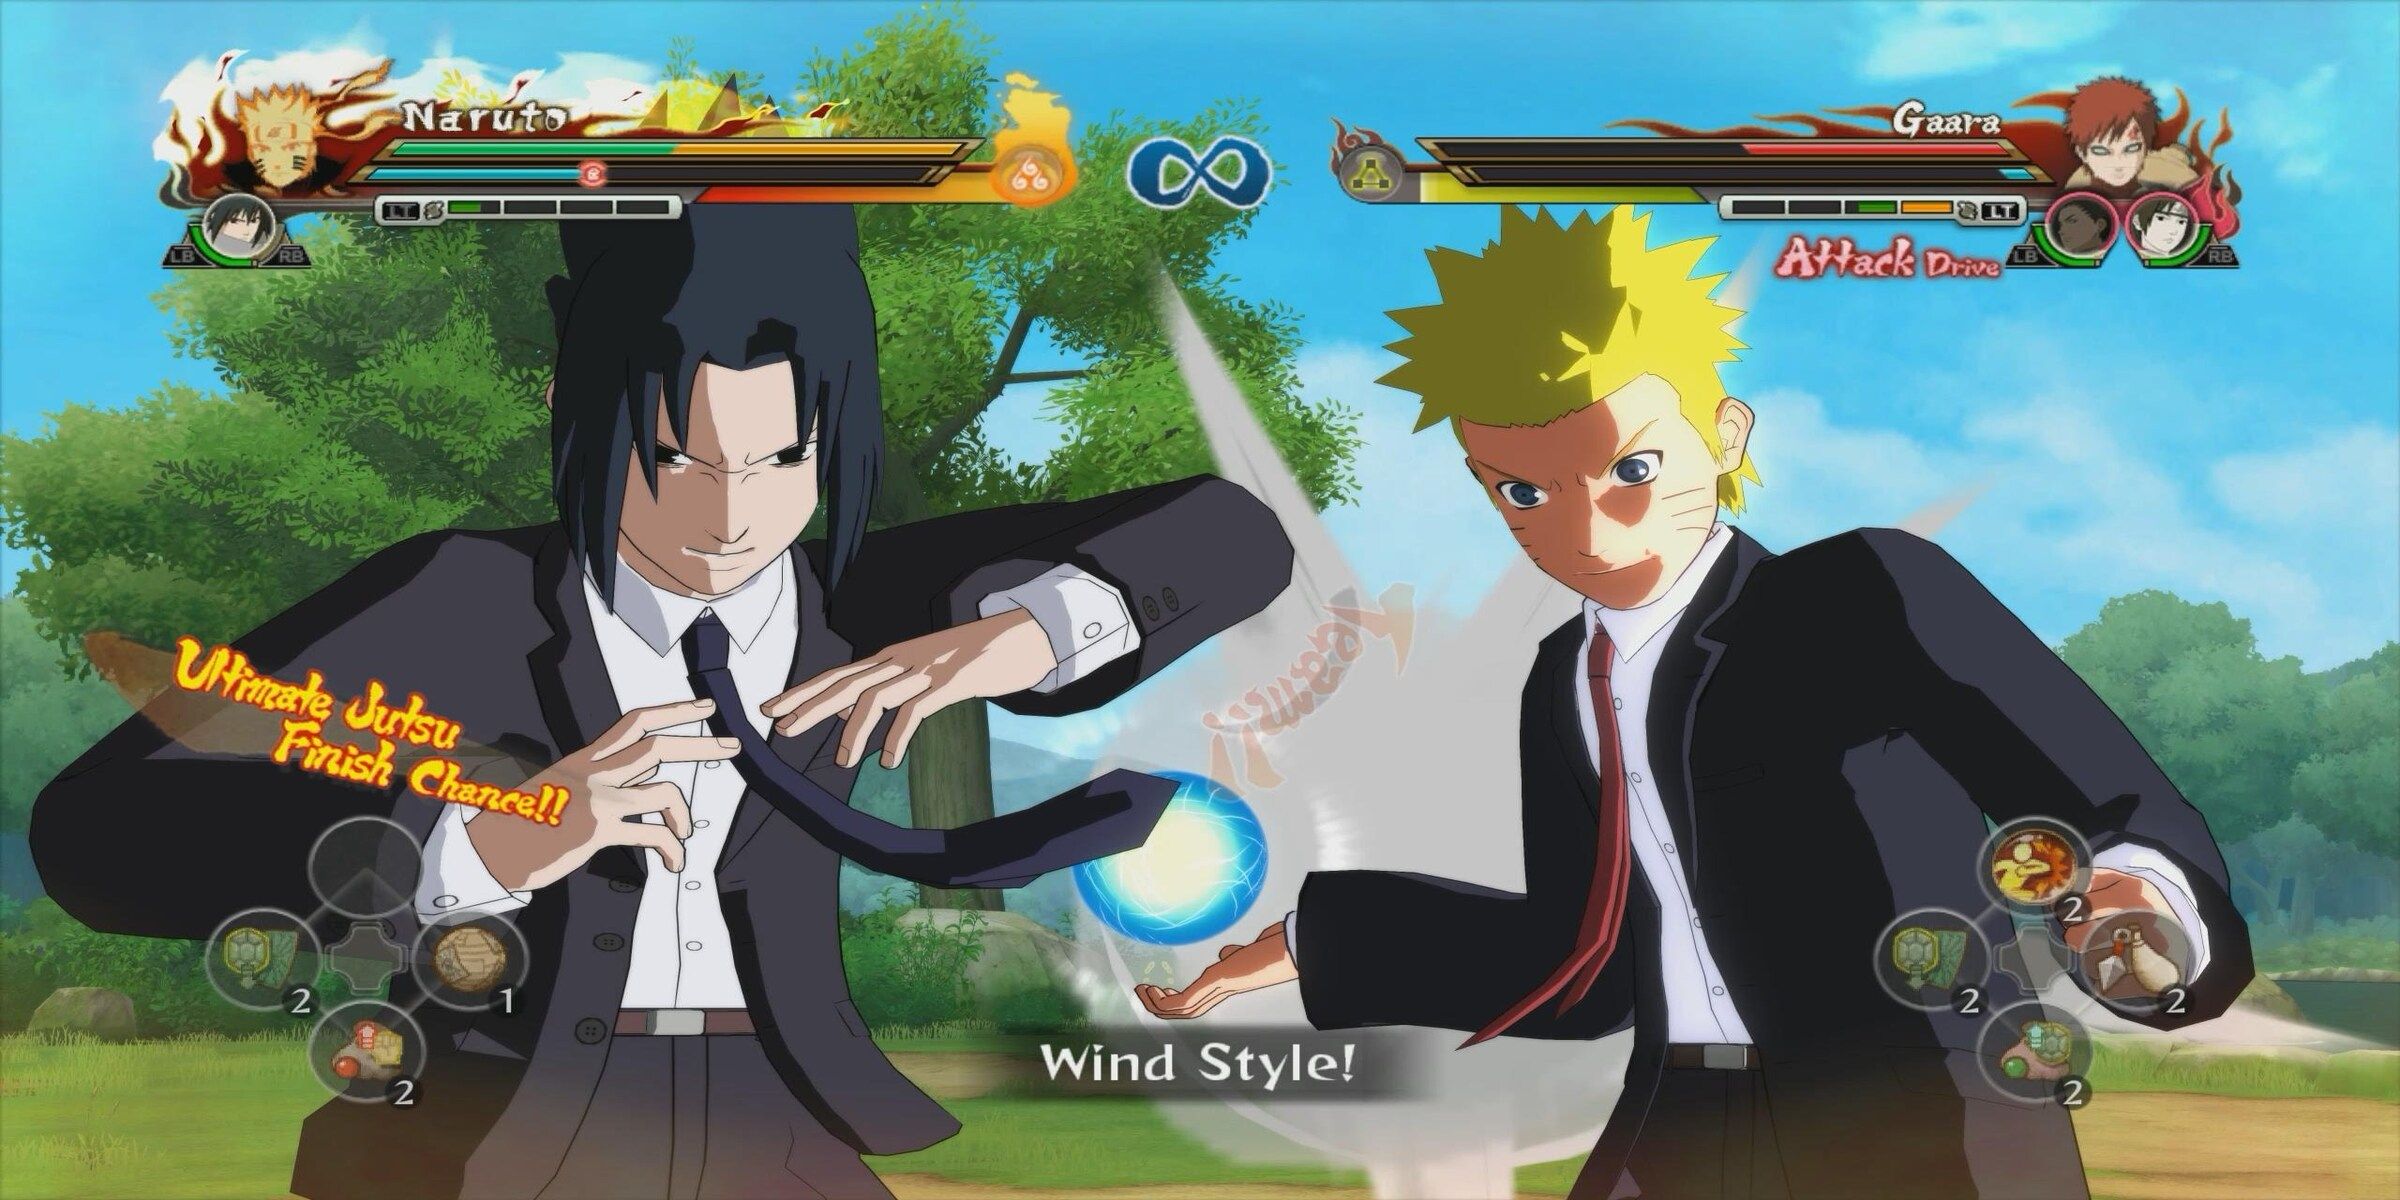 Sasuke and Naruto wearing suits and preparing a duo attack.